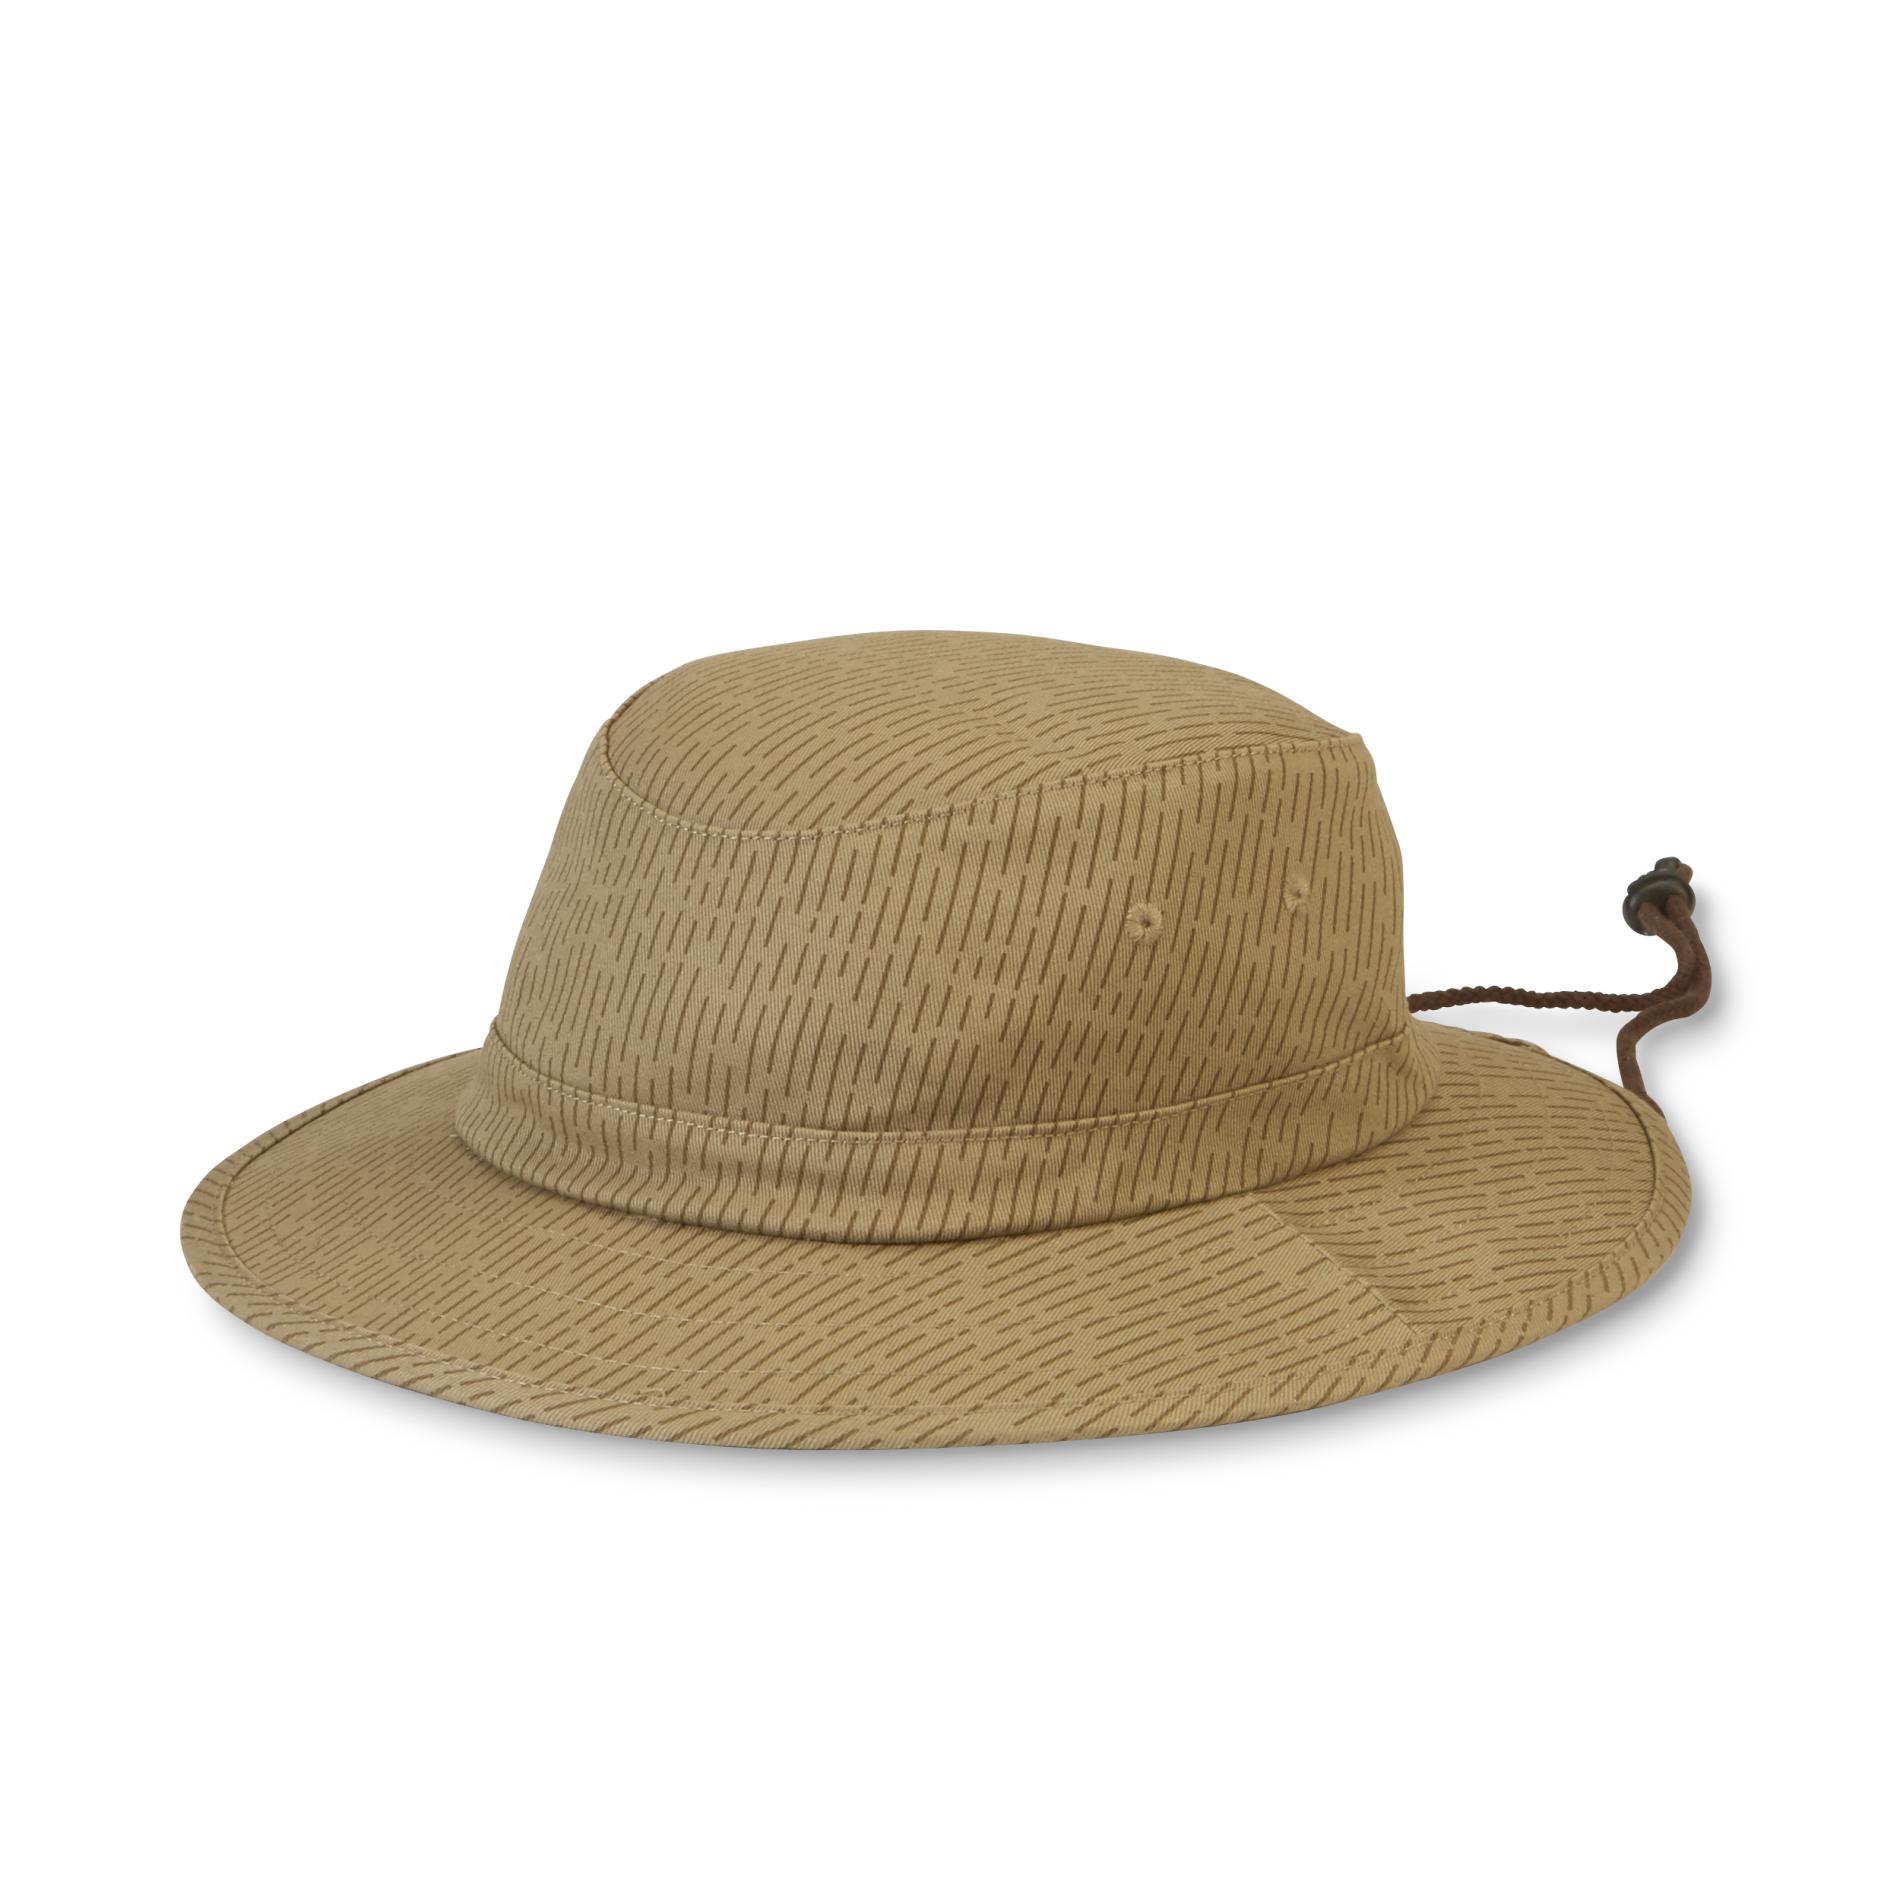 Outdoor Life Men's Boonie Hat - Striped